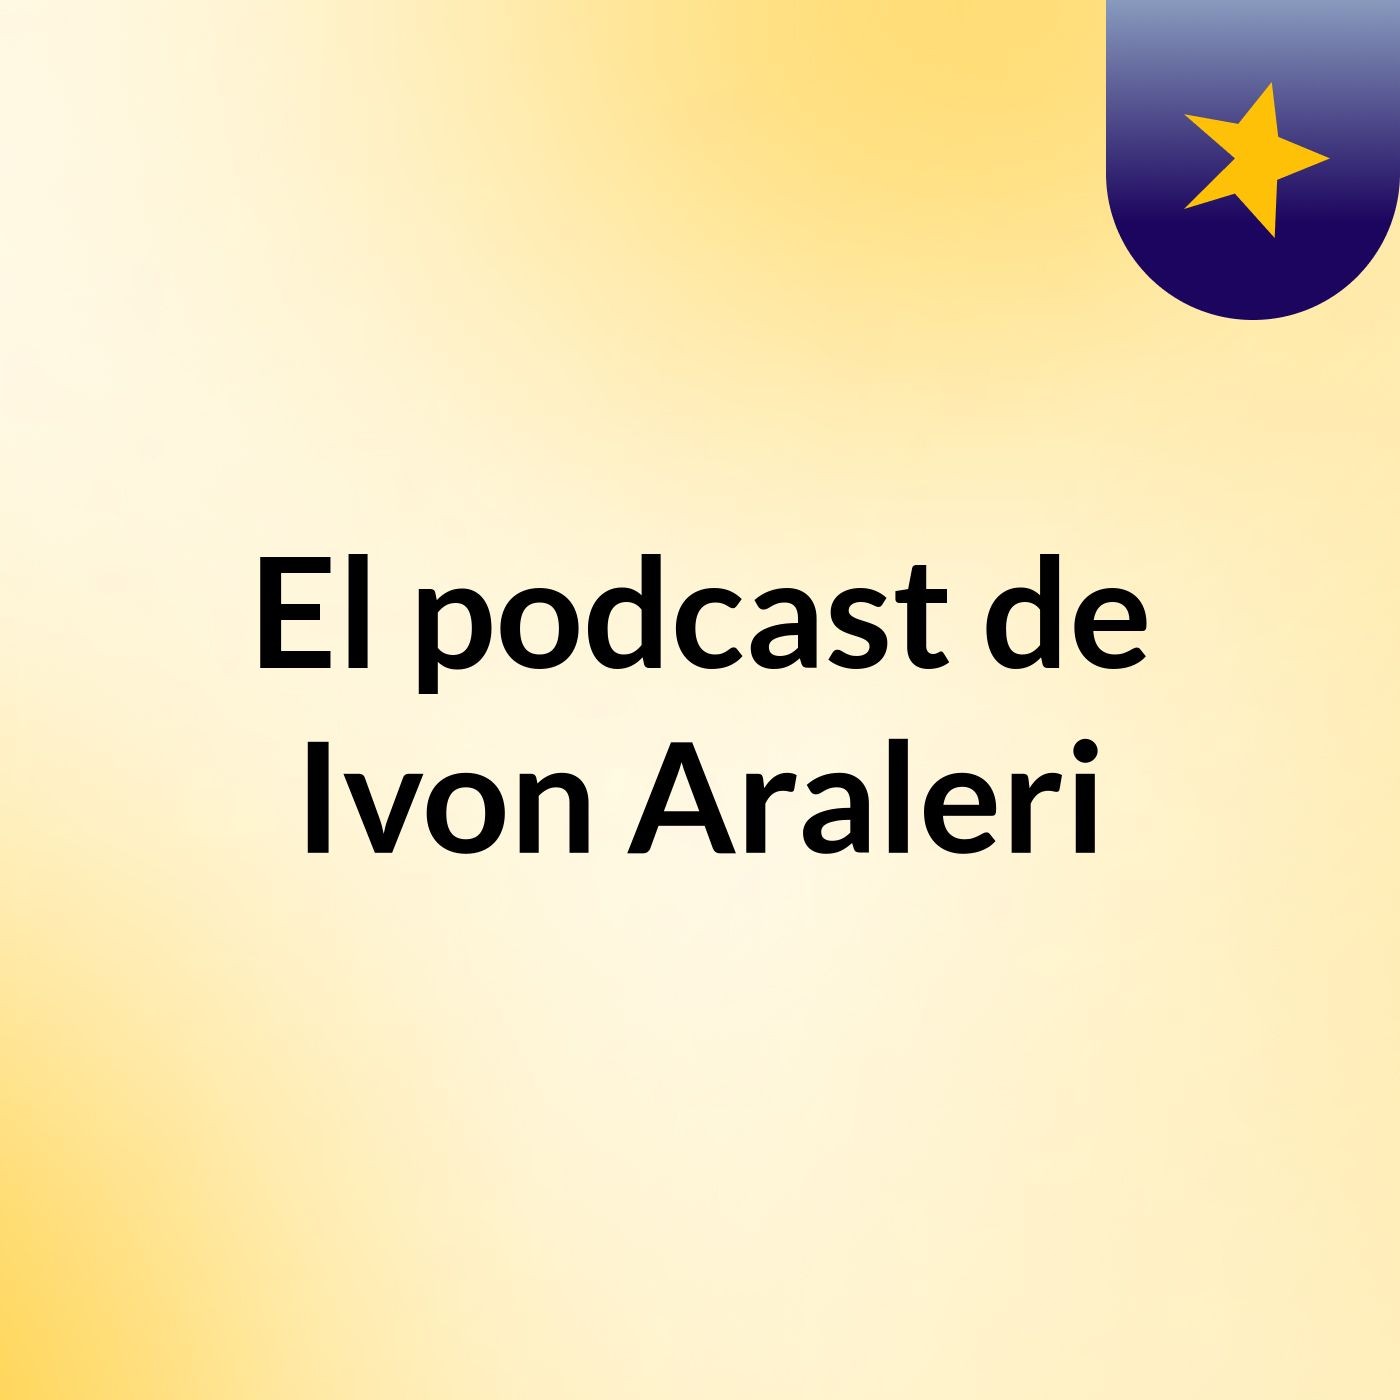 El podcast de Ivon Araleri